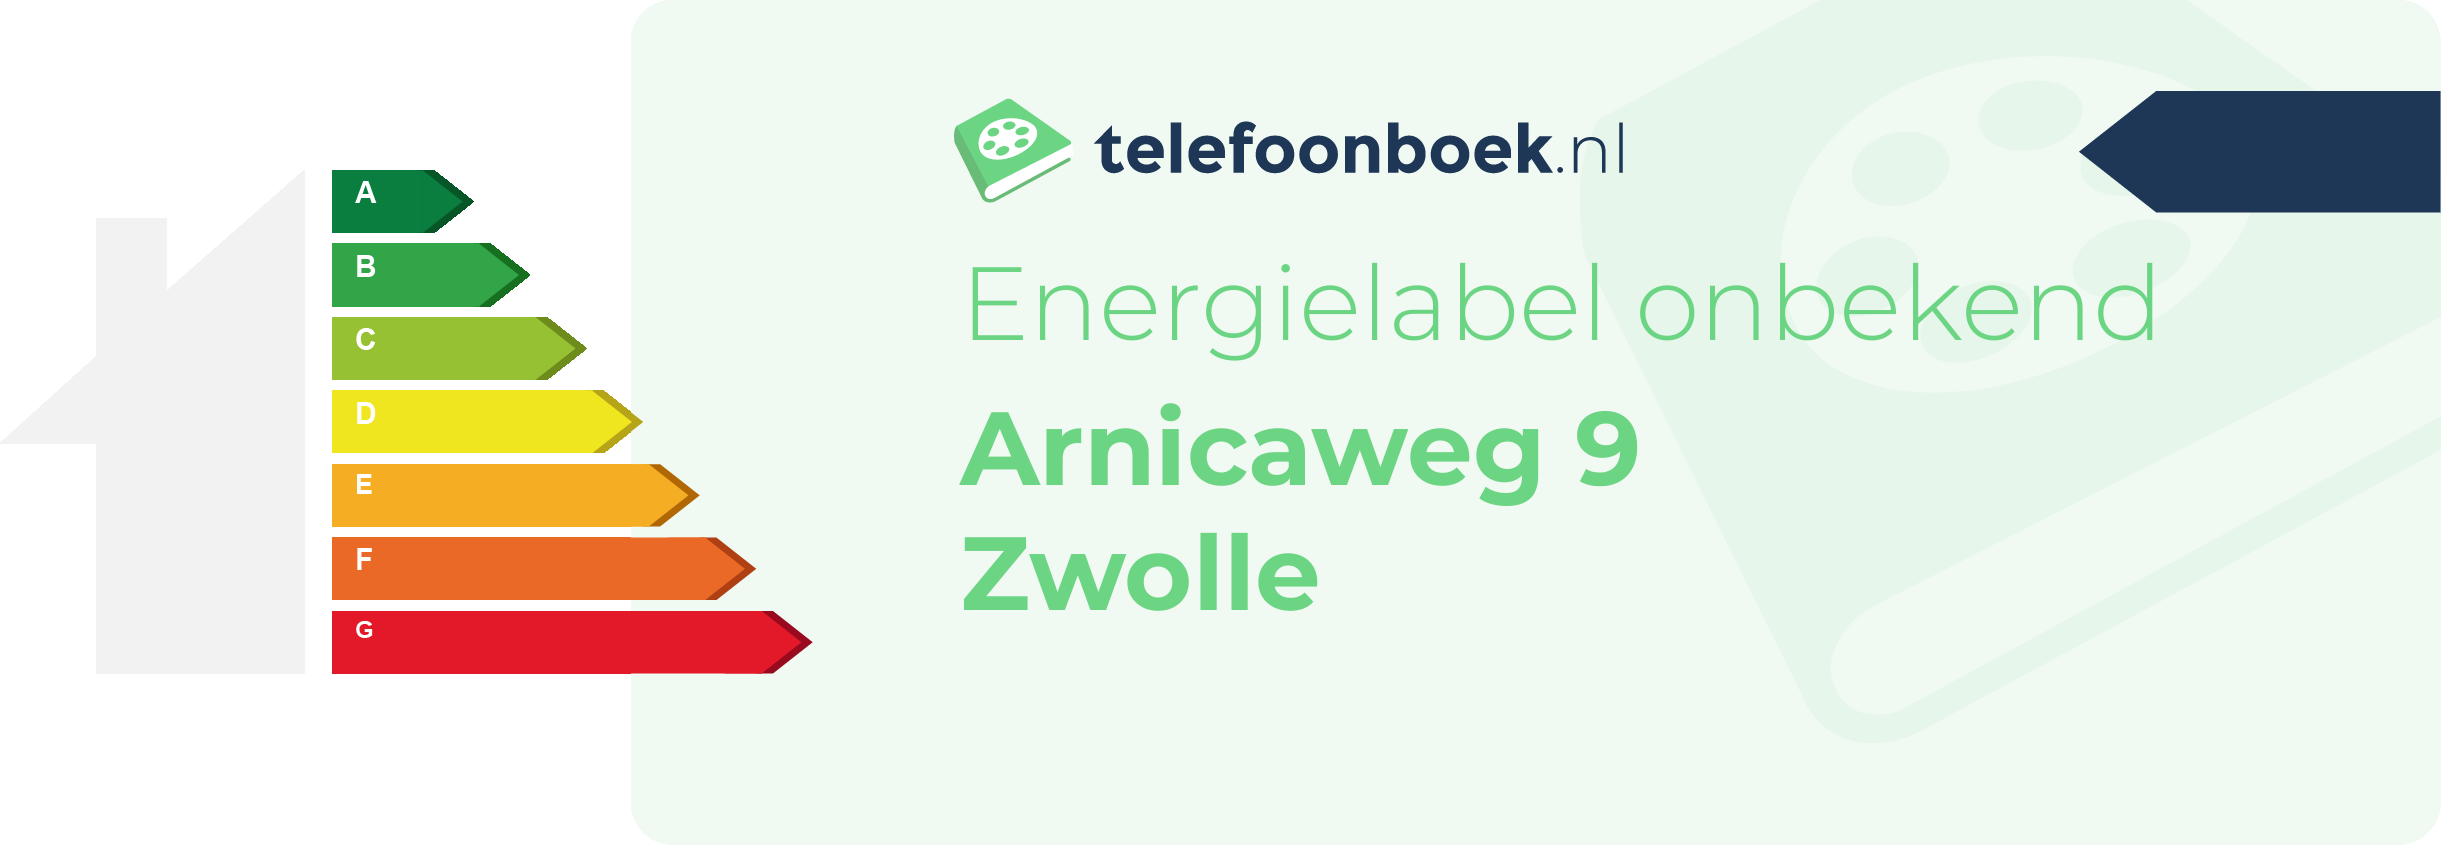 Energielabel Arnicaweg 9 Zwolle